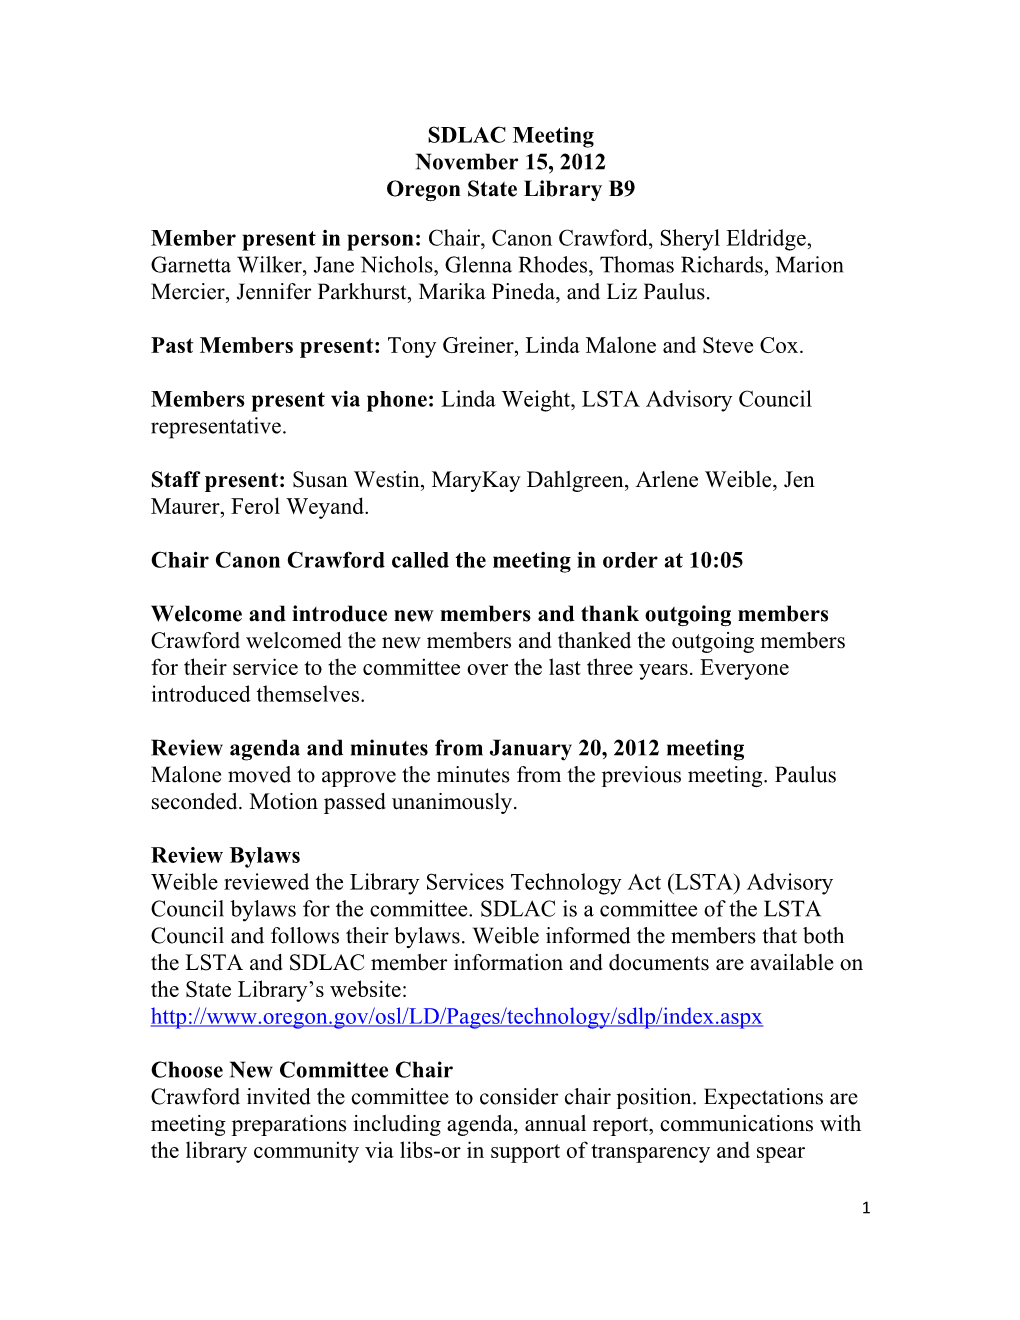 SDLAC Meeting Minutes, November 15, 2012